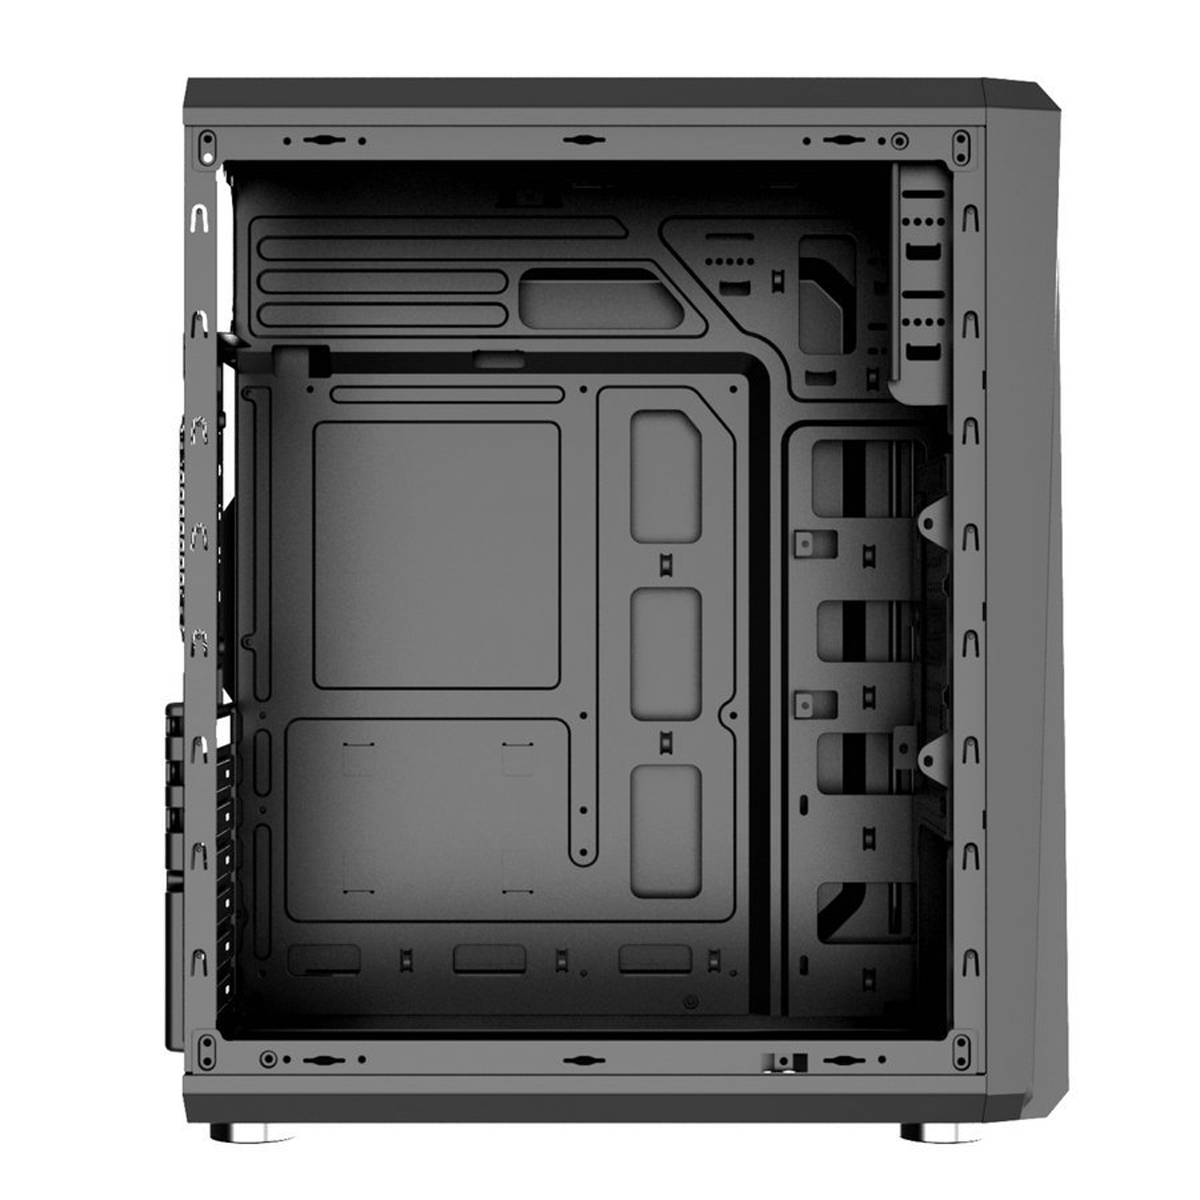 Transparent-Side-Panel-ATX-PC-Case-Desktop-Computer-Case-for-ATX-Micro-ATX-Mini-ITX-Motherboard-1420830